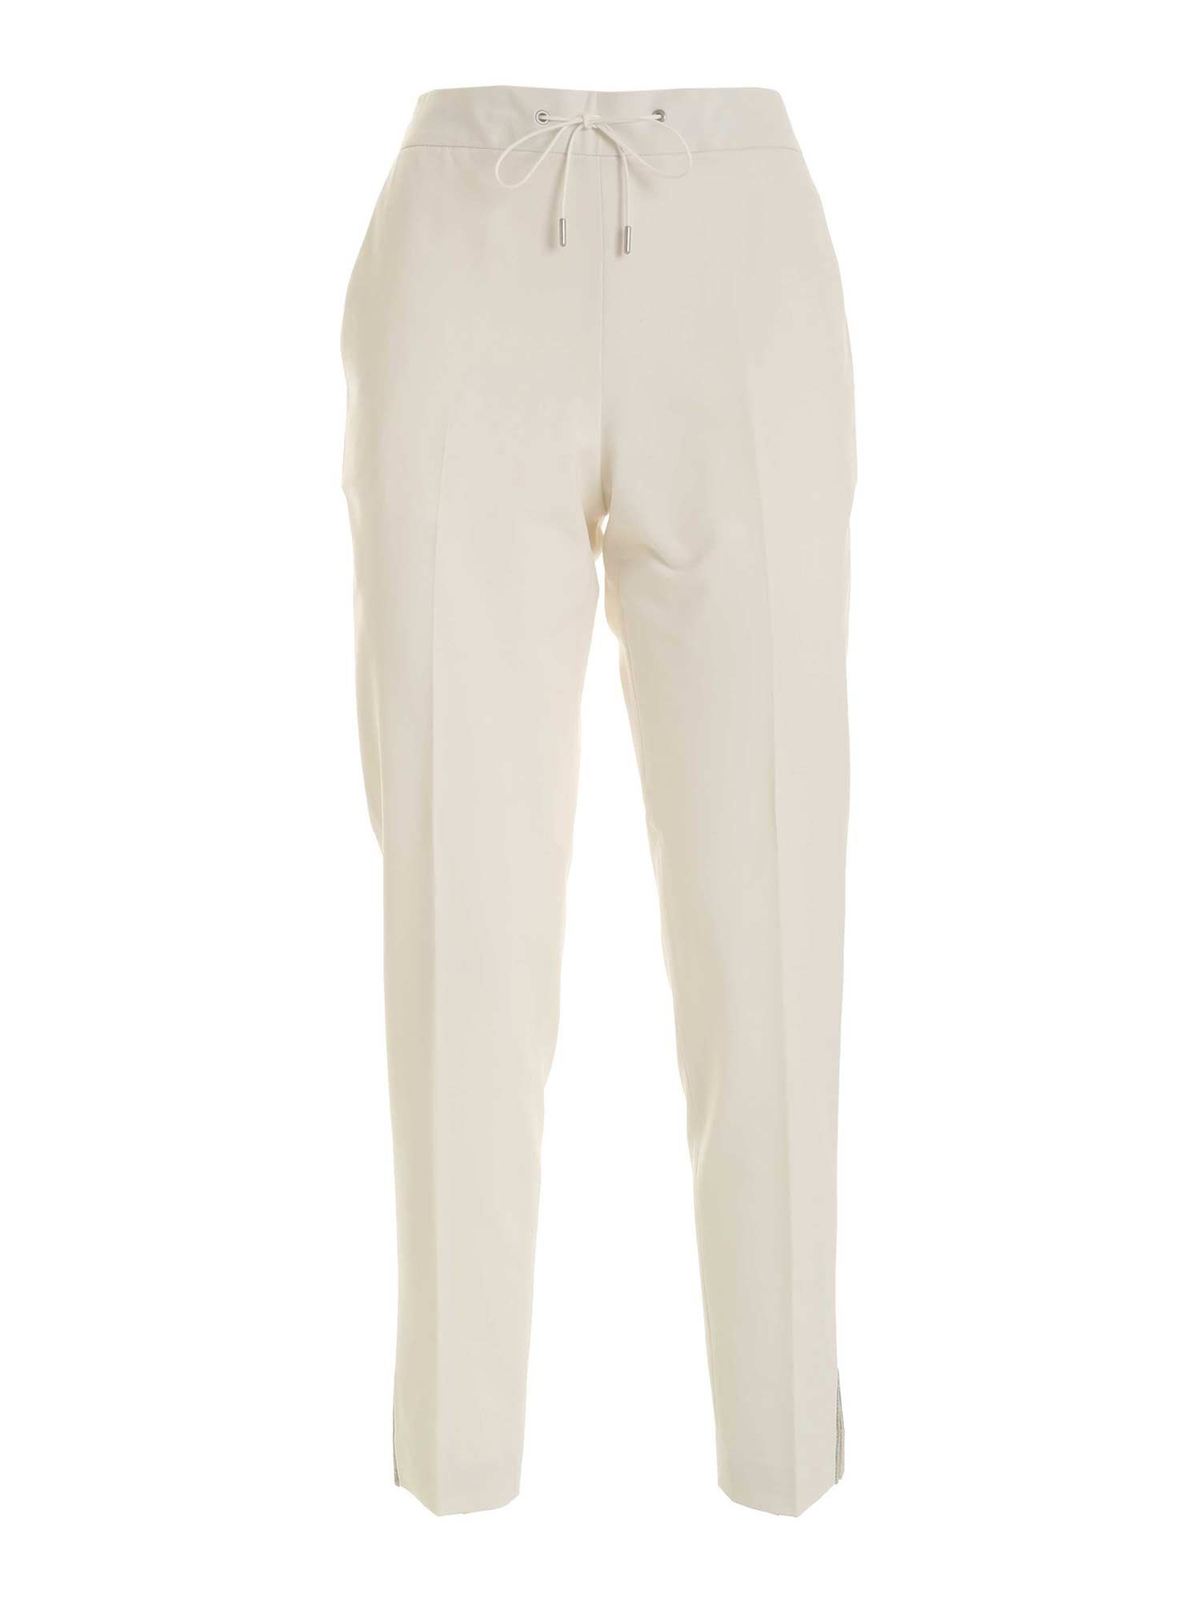 Fabiana Filippi - Micro beads pants in cream color - casual trousers ...